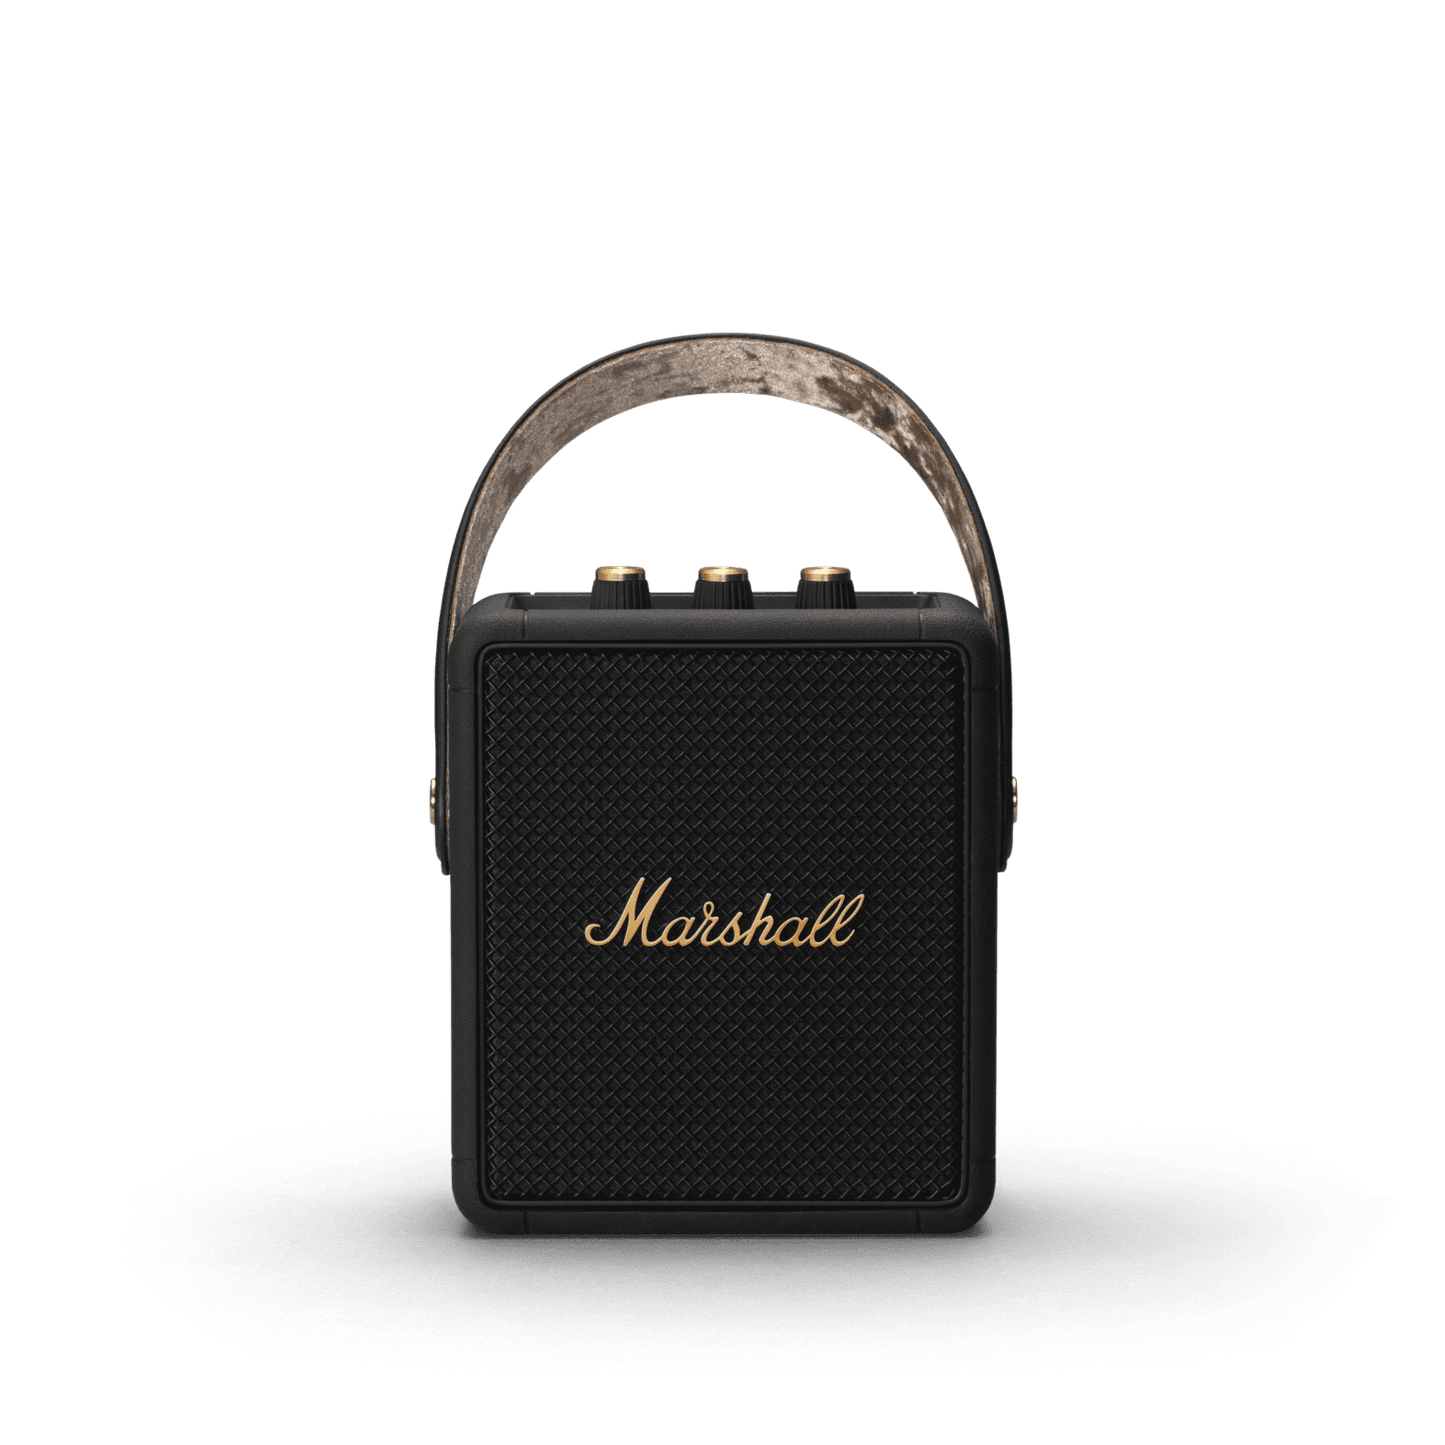 Marshall Stockwell II - Black and Brass